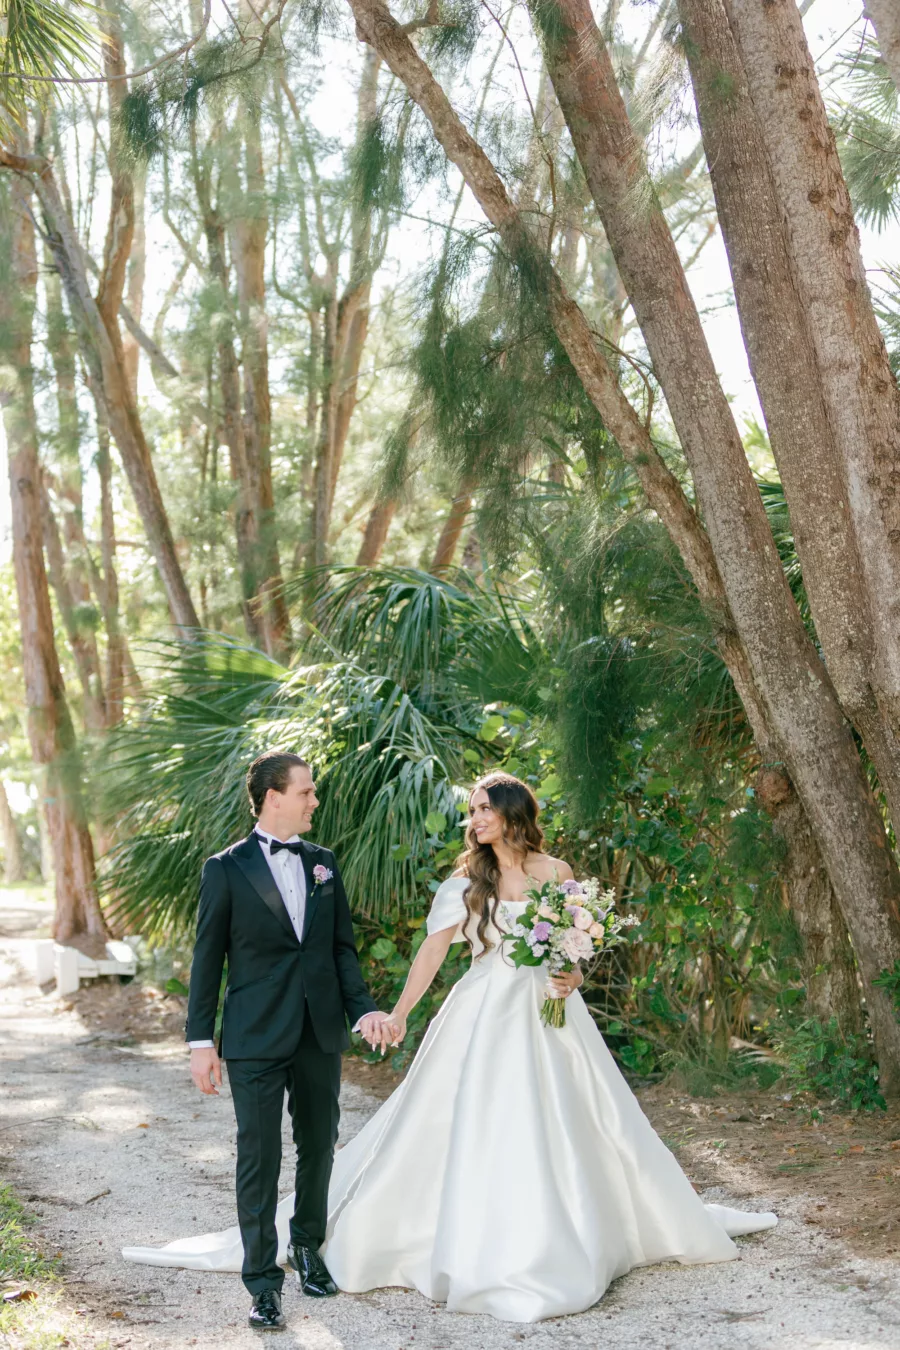 Bride and Groom Tropical First Look Wedding Portrait | Sarasota Wedding Venue The Resort at Longboat Key Club